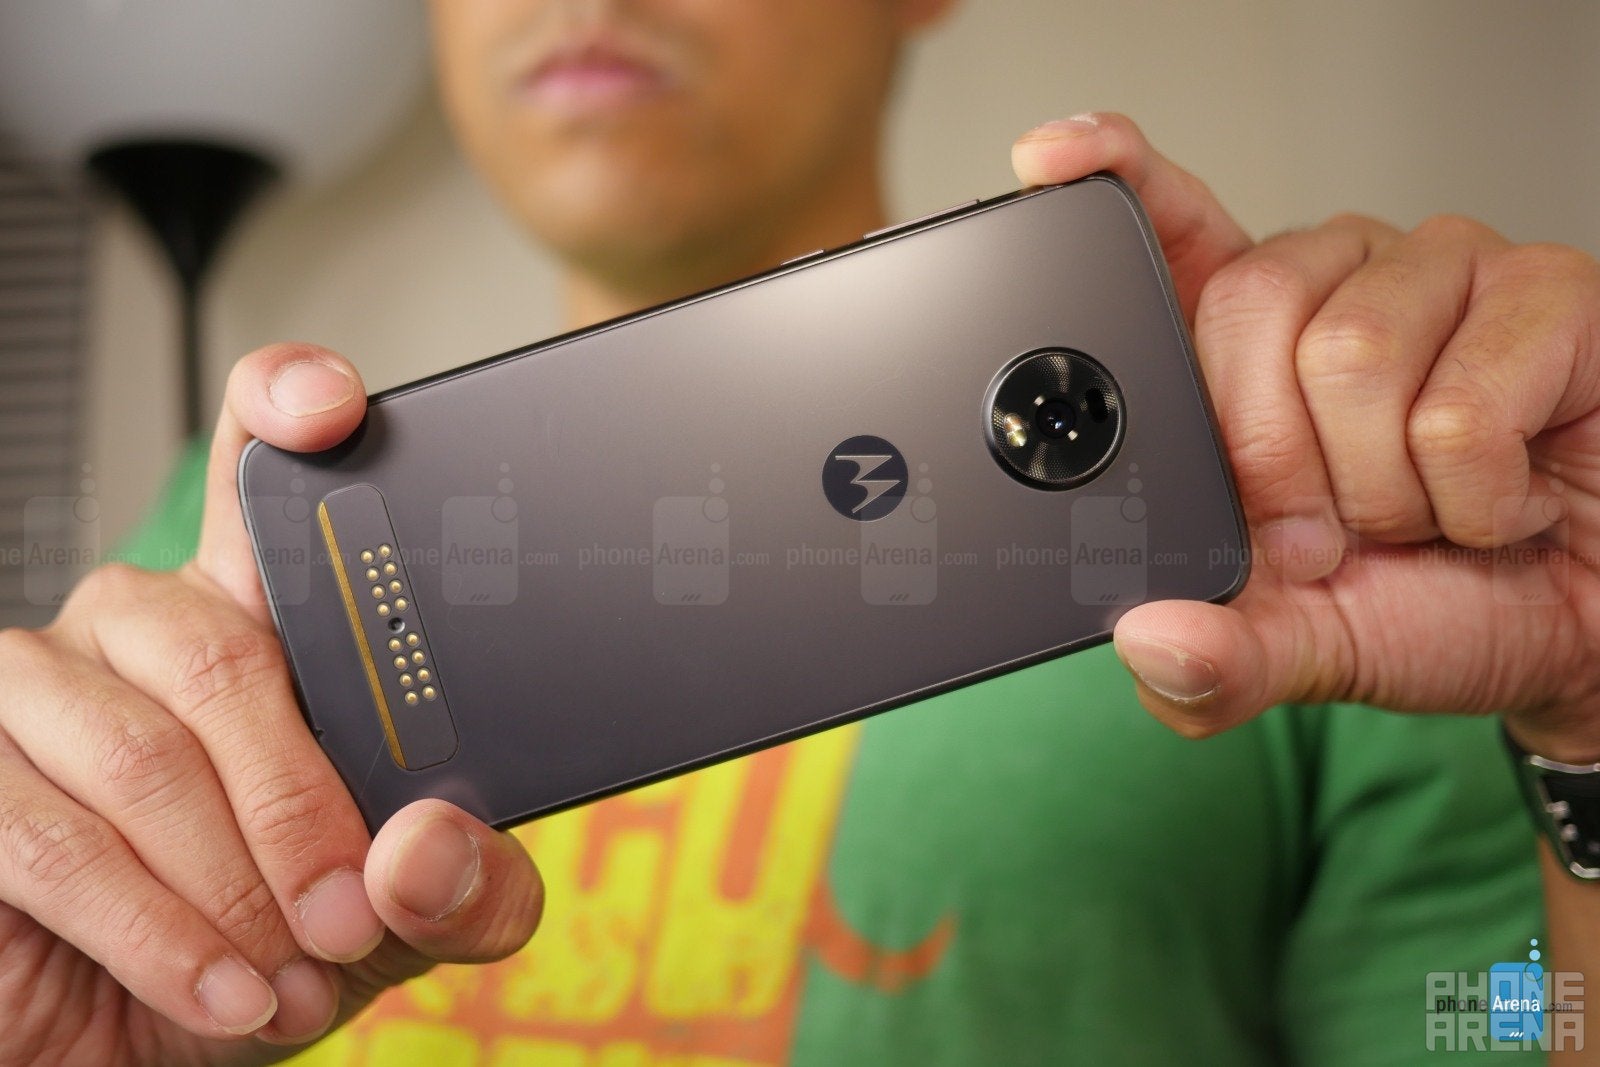 Review: Motorola Moto E4 Plus (Phone Scoop)